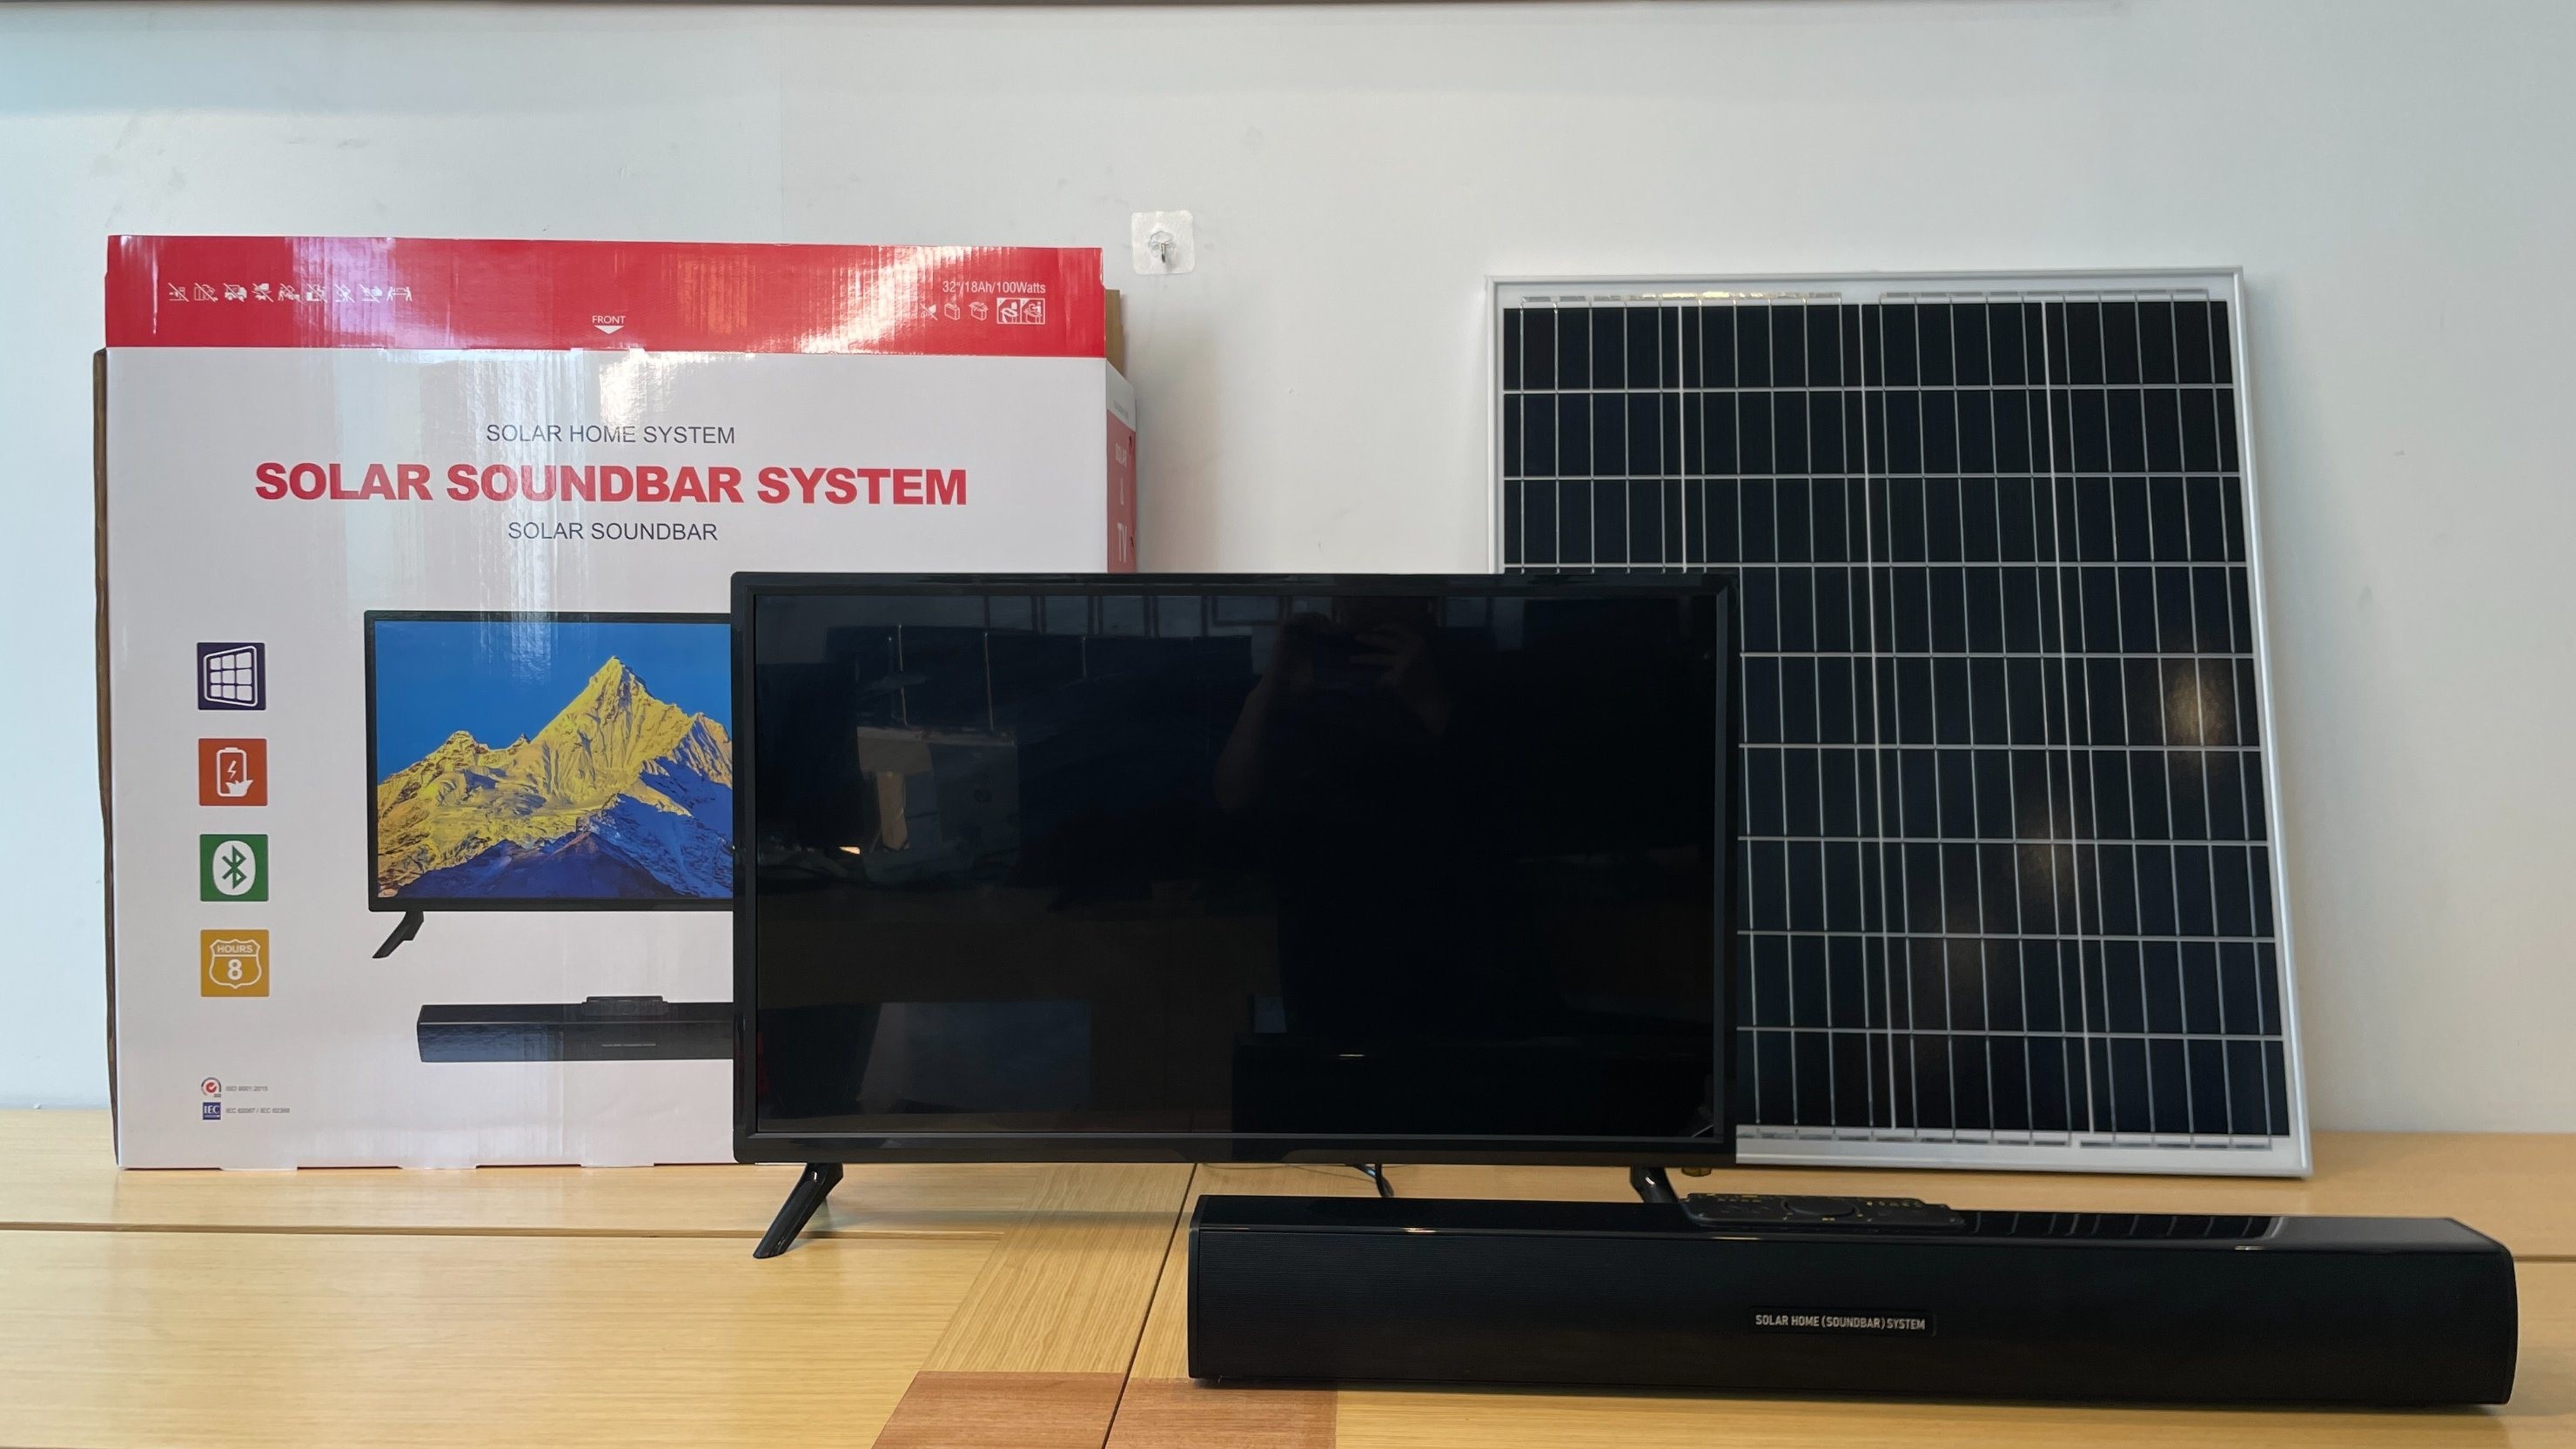 OEM Solar Soundbar TV System for Solar Home Energy Storage a Mini Solar Generator with 12W Low Energy Consumption TV